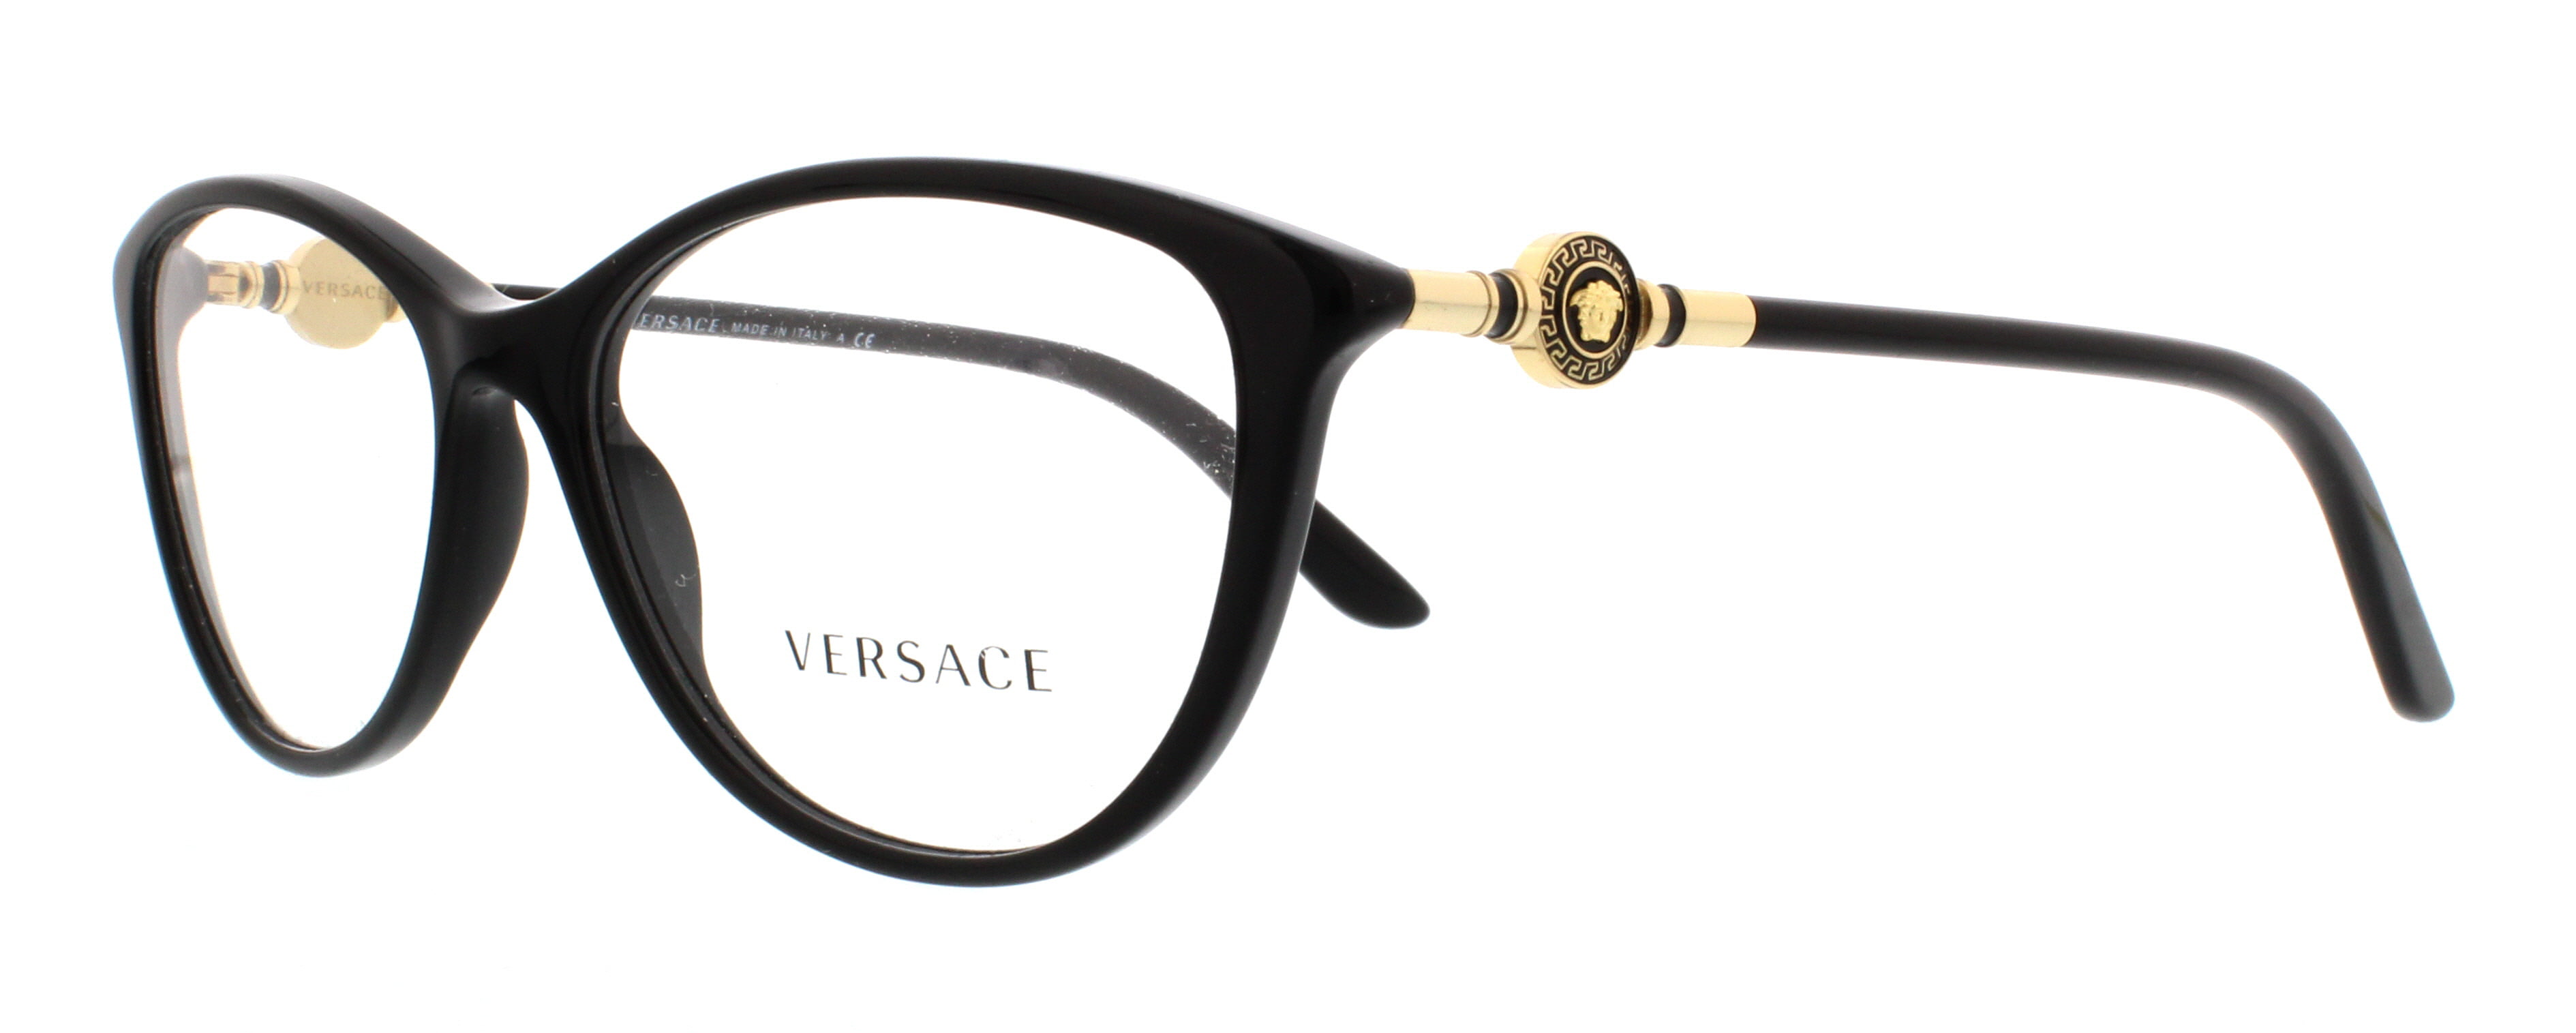 VERSACE Eyeglasses VE3175 GB1 Black 54MM - Walmart.com